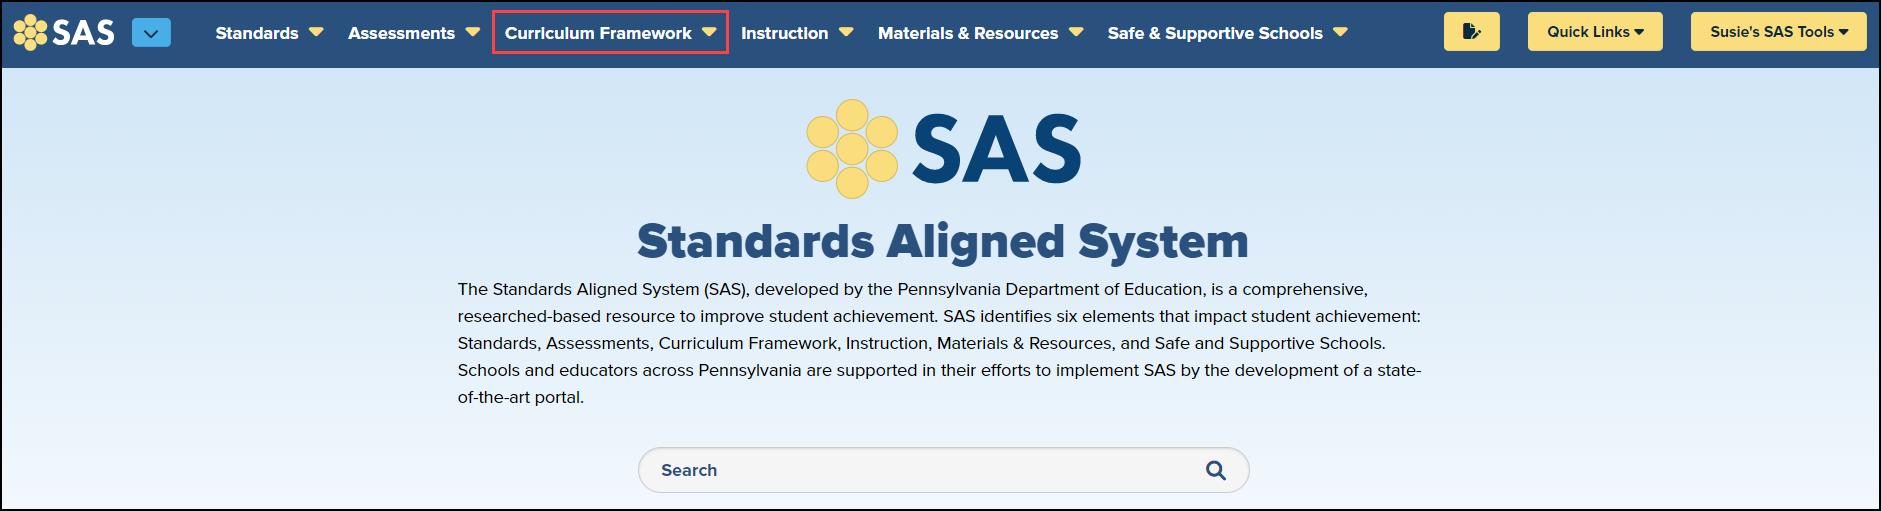 sas homepage with curriculum framework menu highlighted